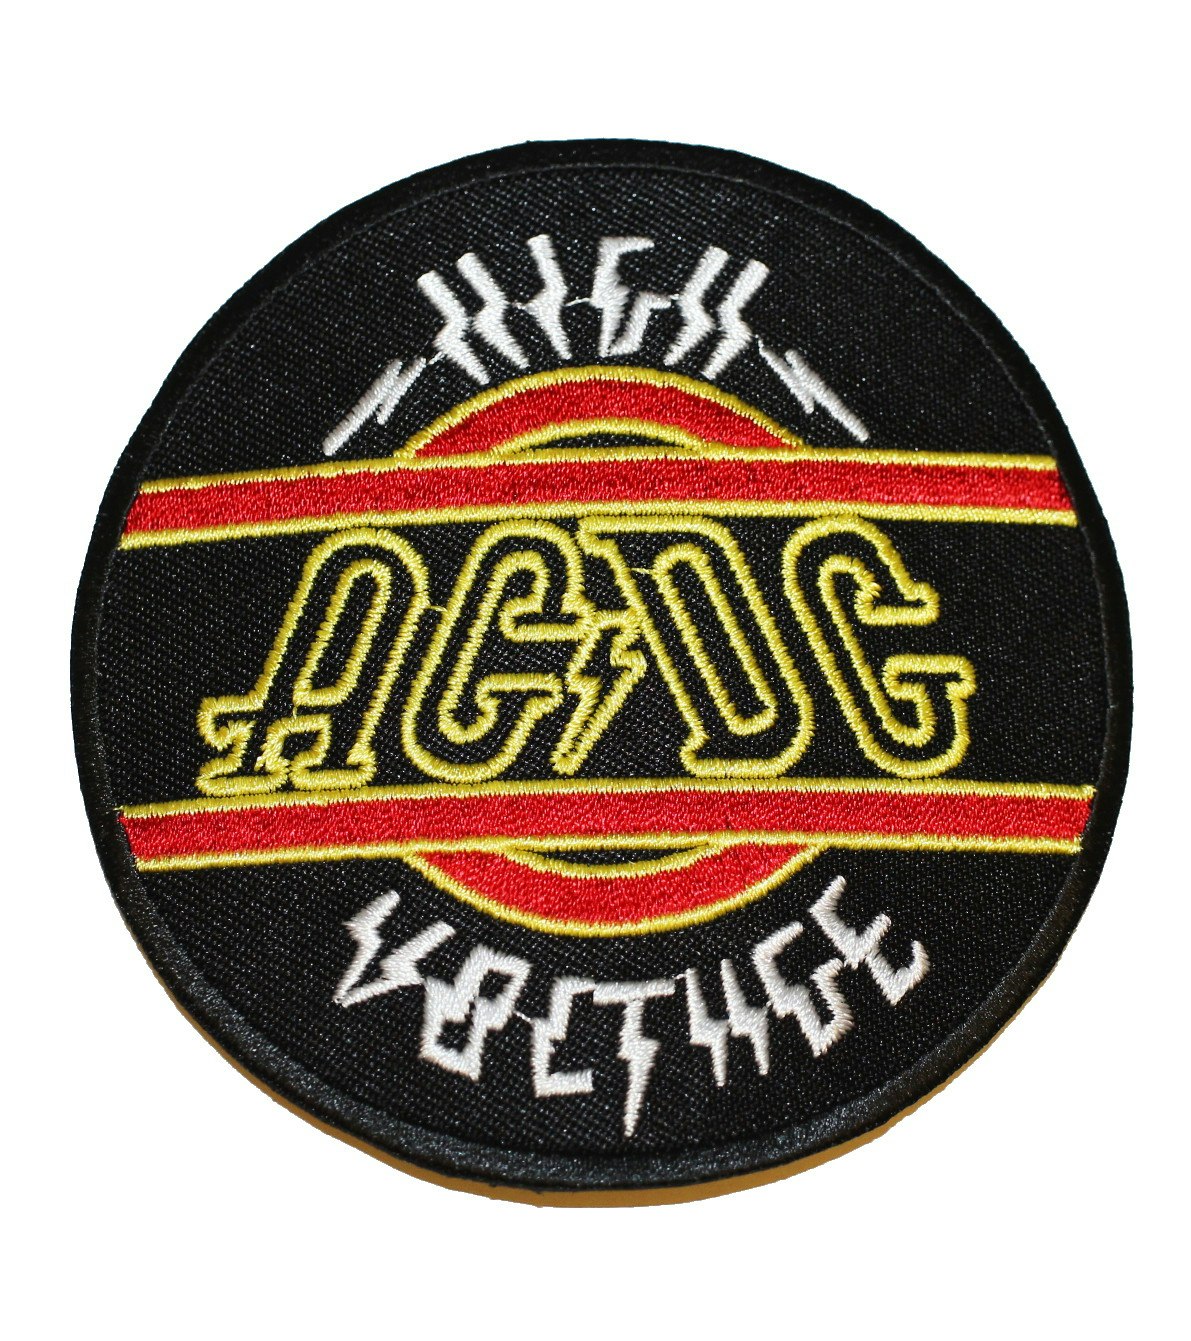 Ac/dc High voltage logo patch